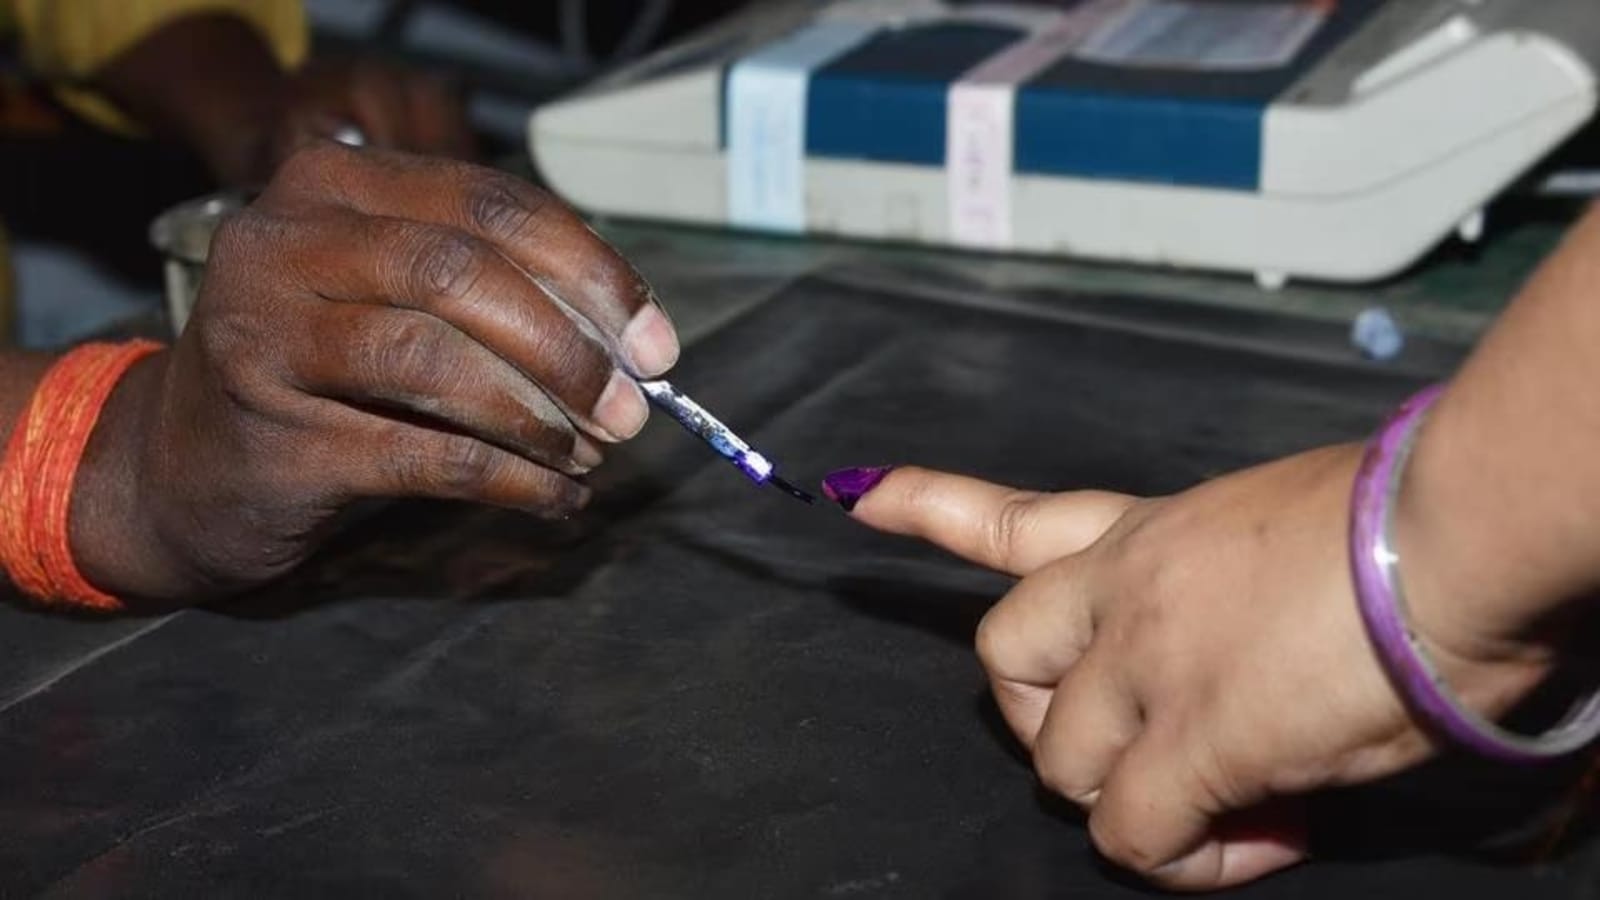 karnataka elections